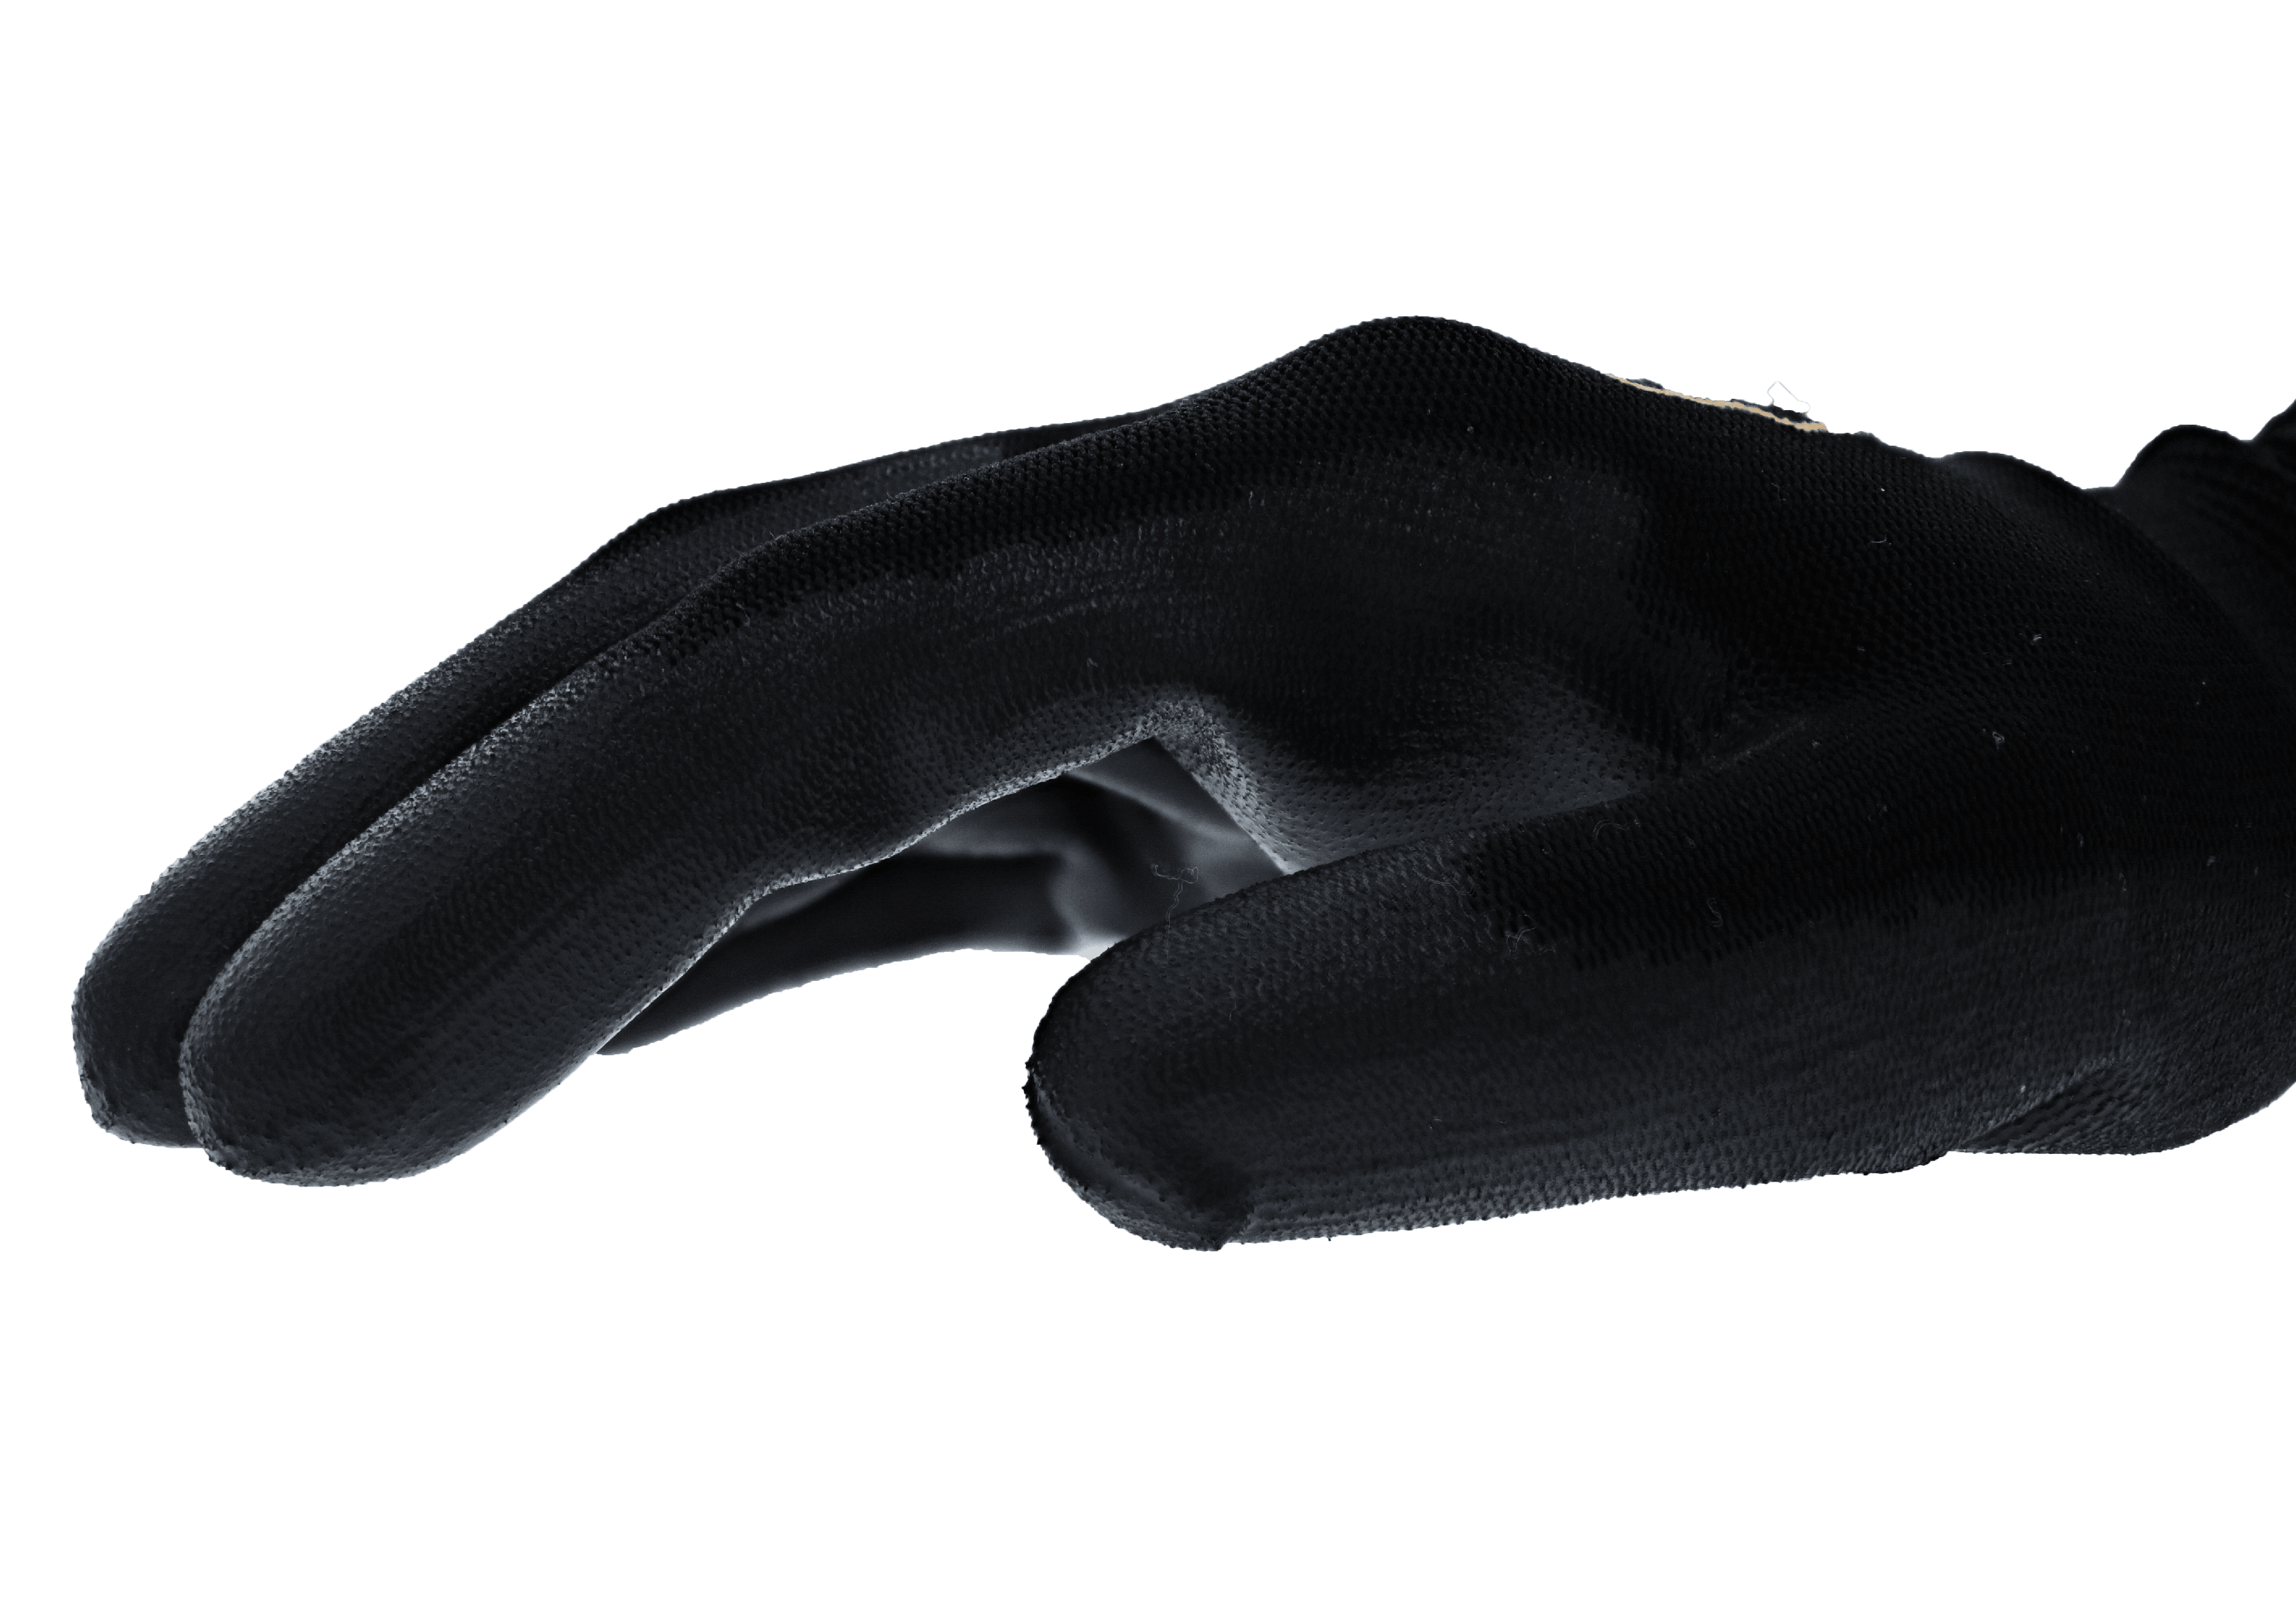 5 Pack Gorilla Grip Gloves - Large - Yahoo Shopping